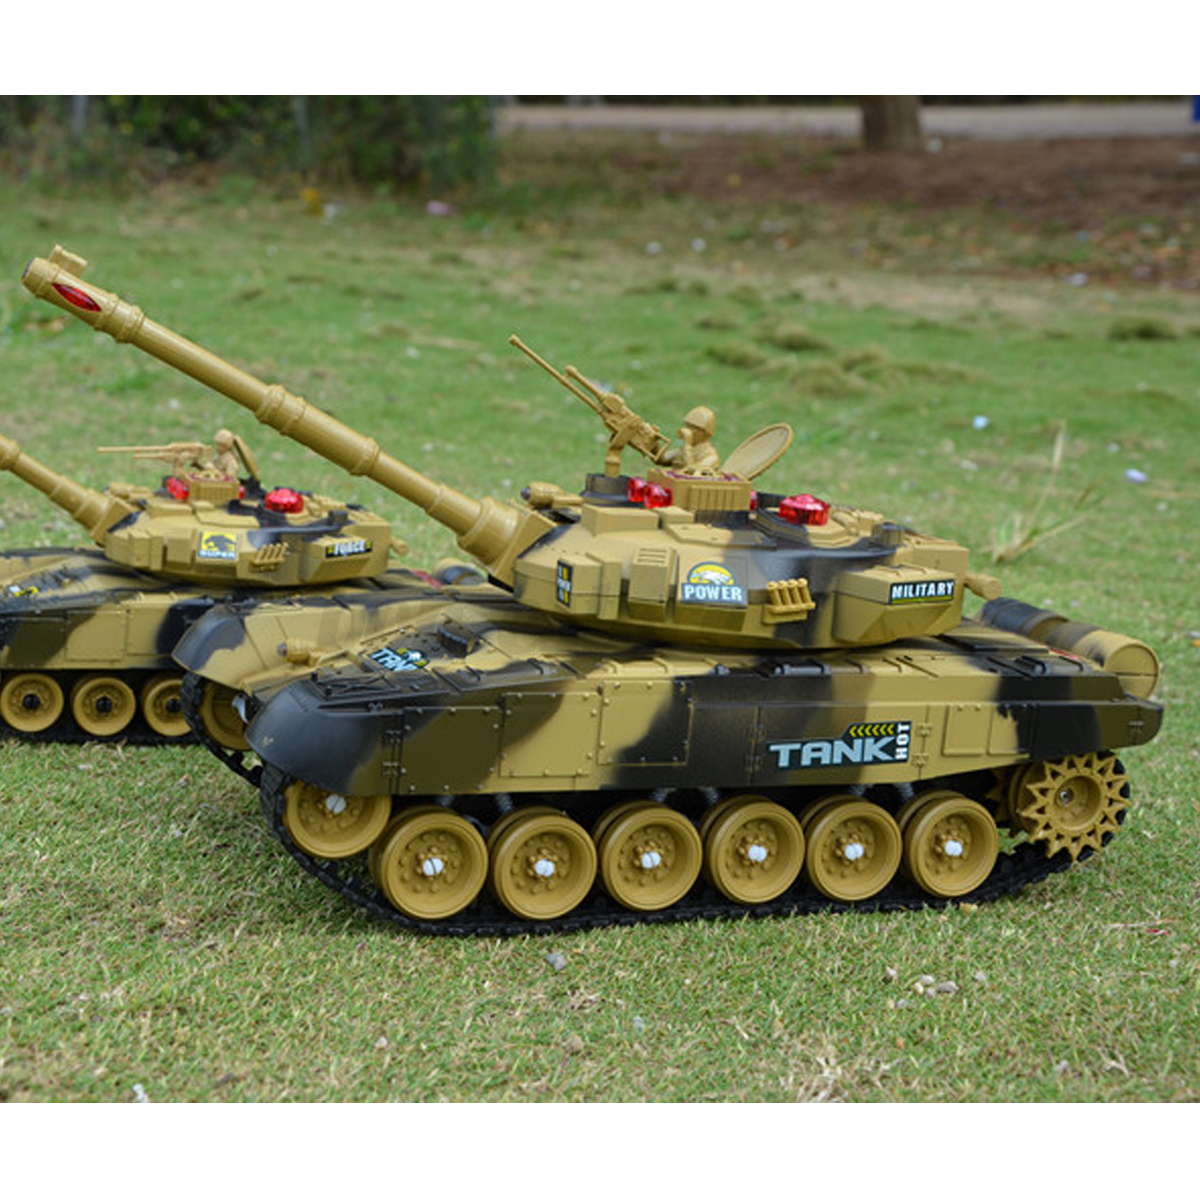 rc military tank radio remote control car - yellow camouflage